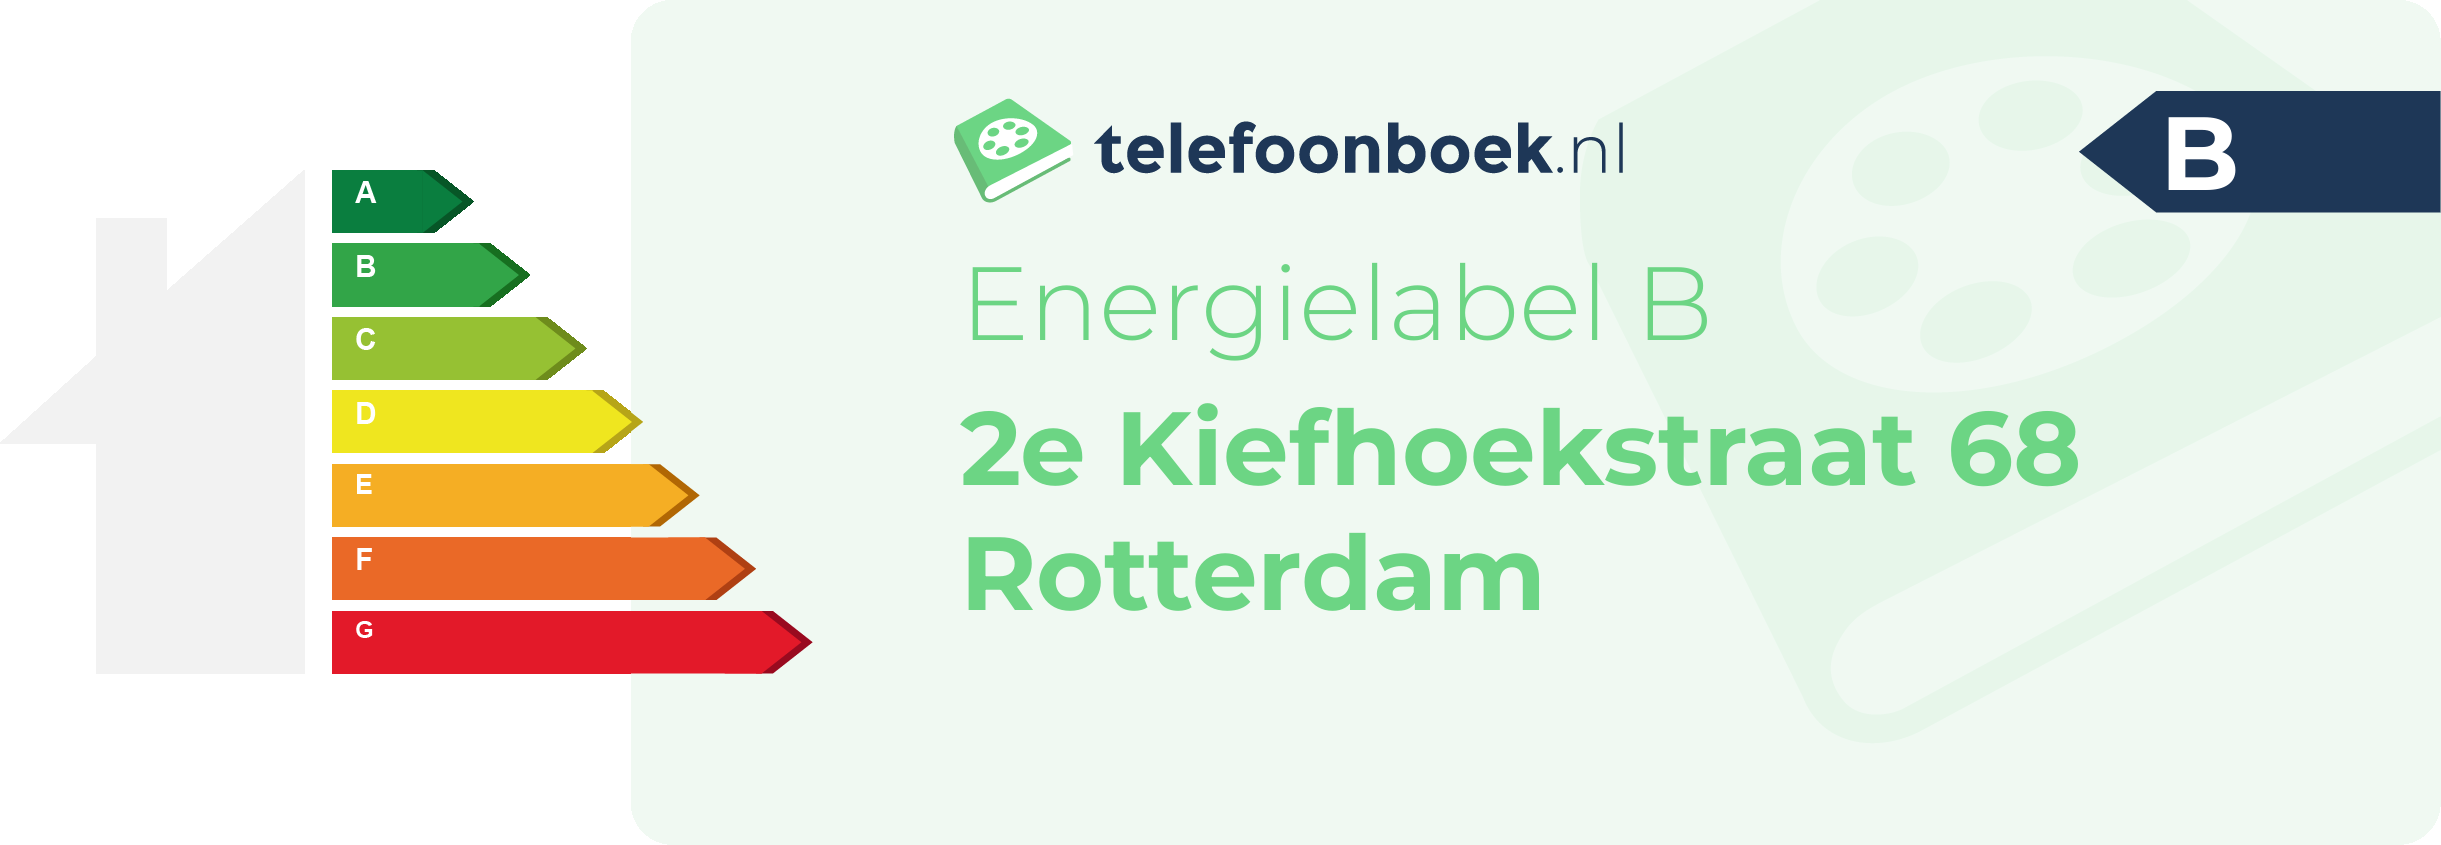 Energielabel 2e Kiefhoekstraat 68 Rotterdam